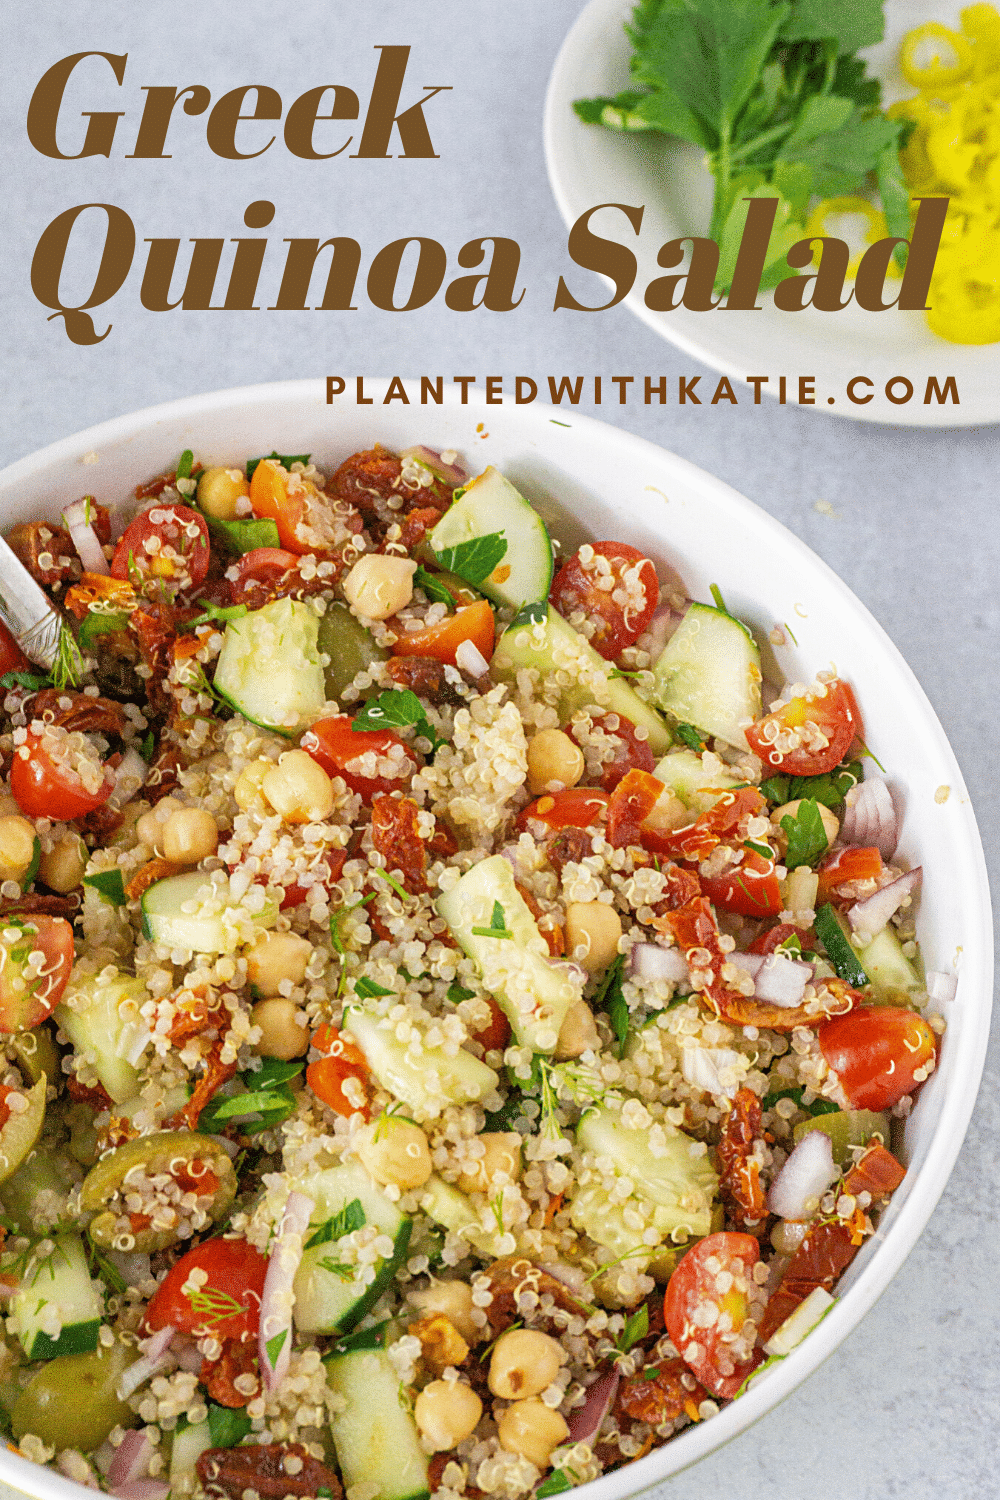 Whole Food, Plant-Based Greek Quinoa Salad